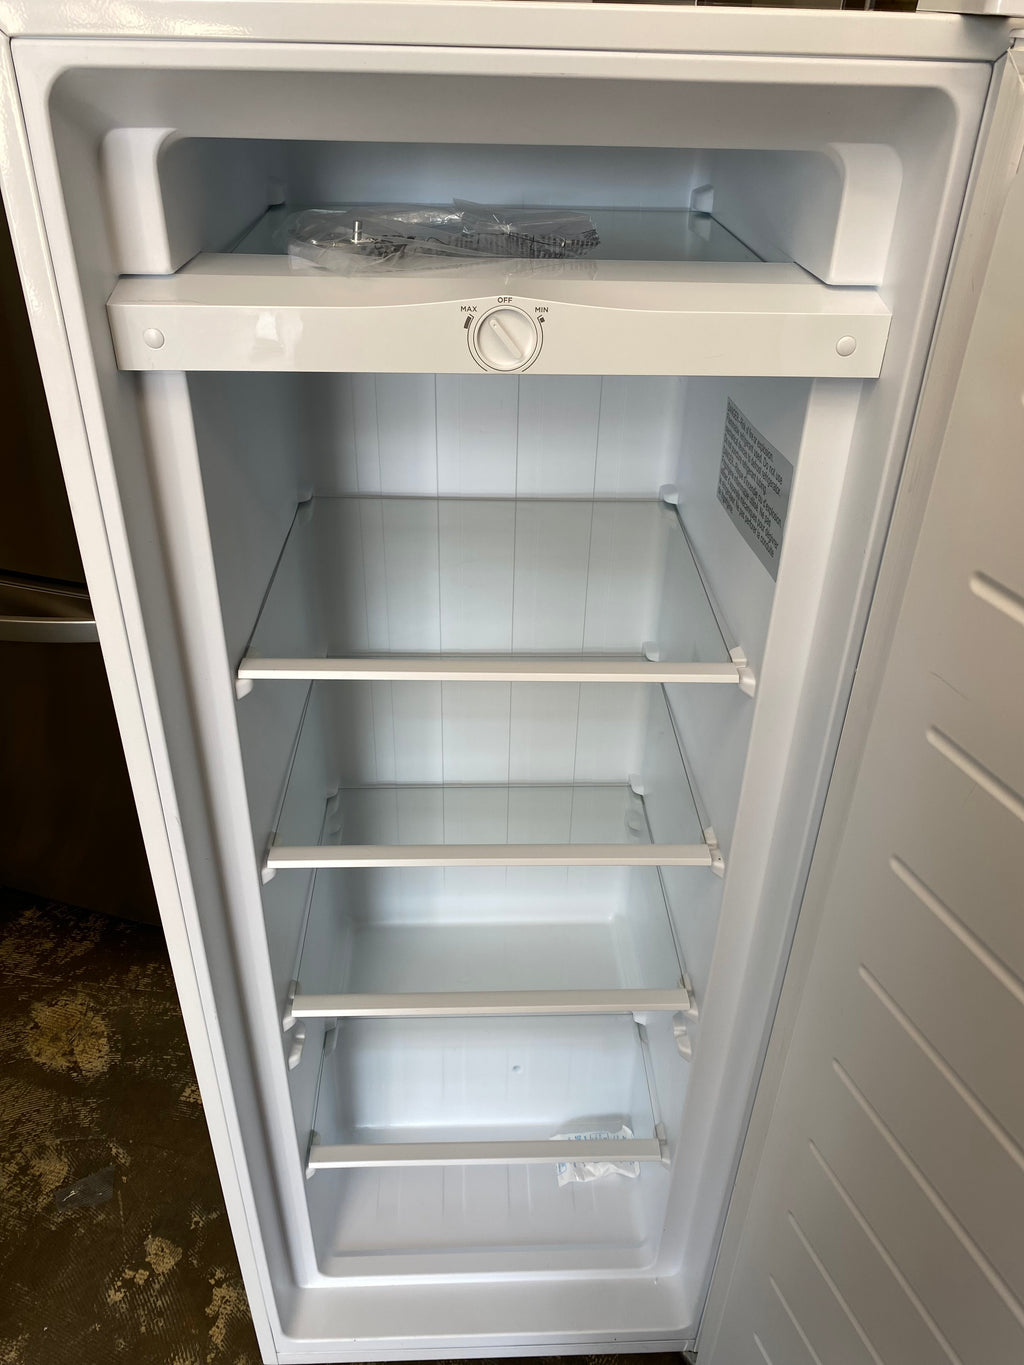 Insignia NS-UZ7WH0 7 Cu. Ft. Garage Ready Upright Freezer: White –  Appliance Store Discount